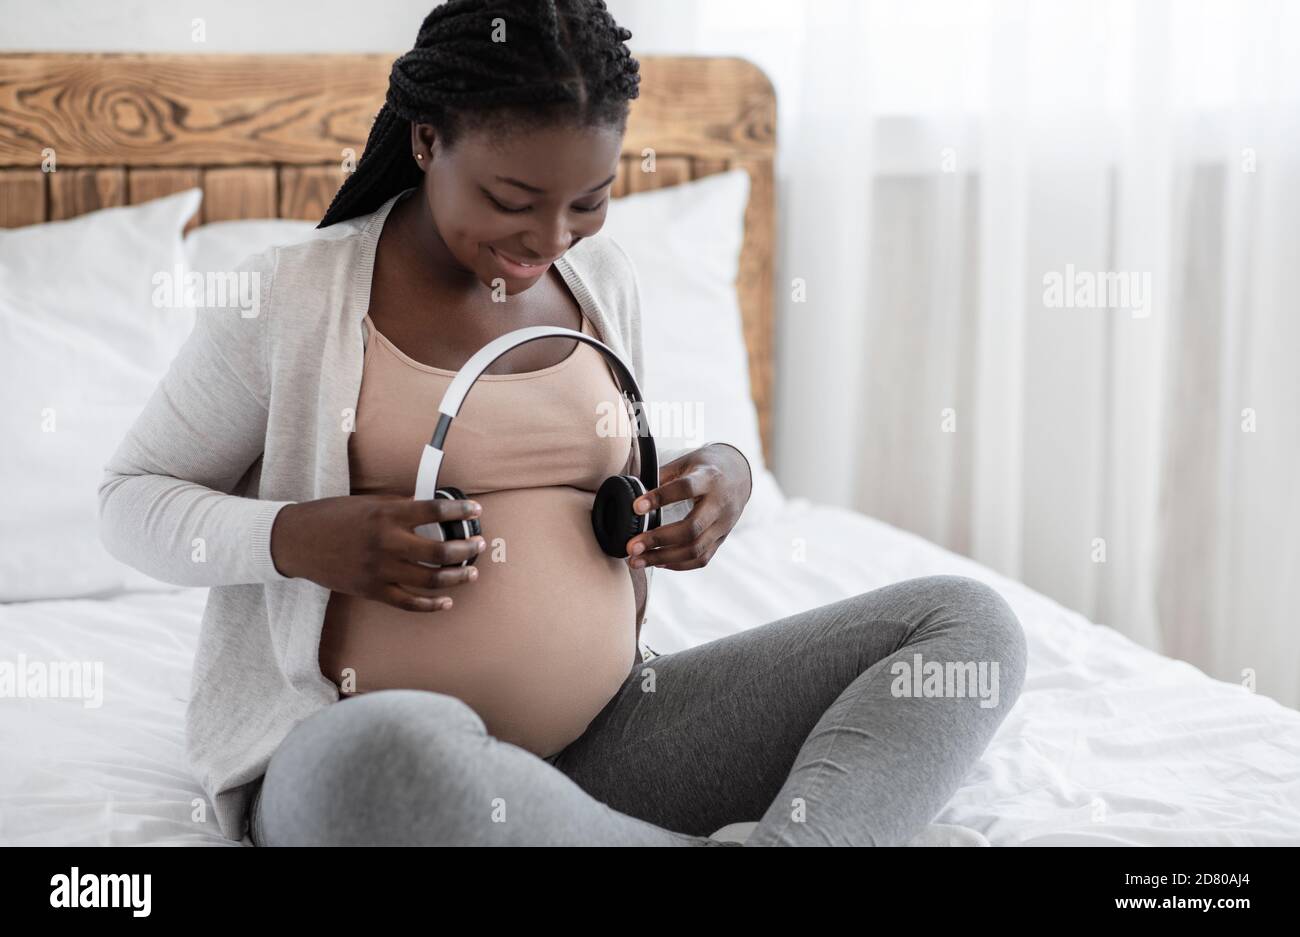 Belly Earphones For Pregnancy Pregnancy Headphones For Belly Plays